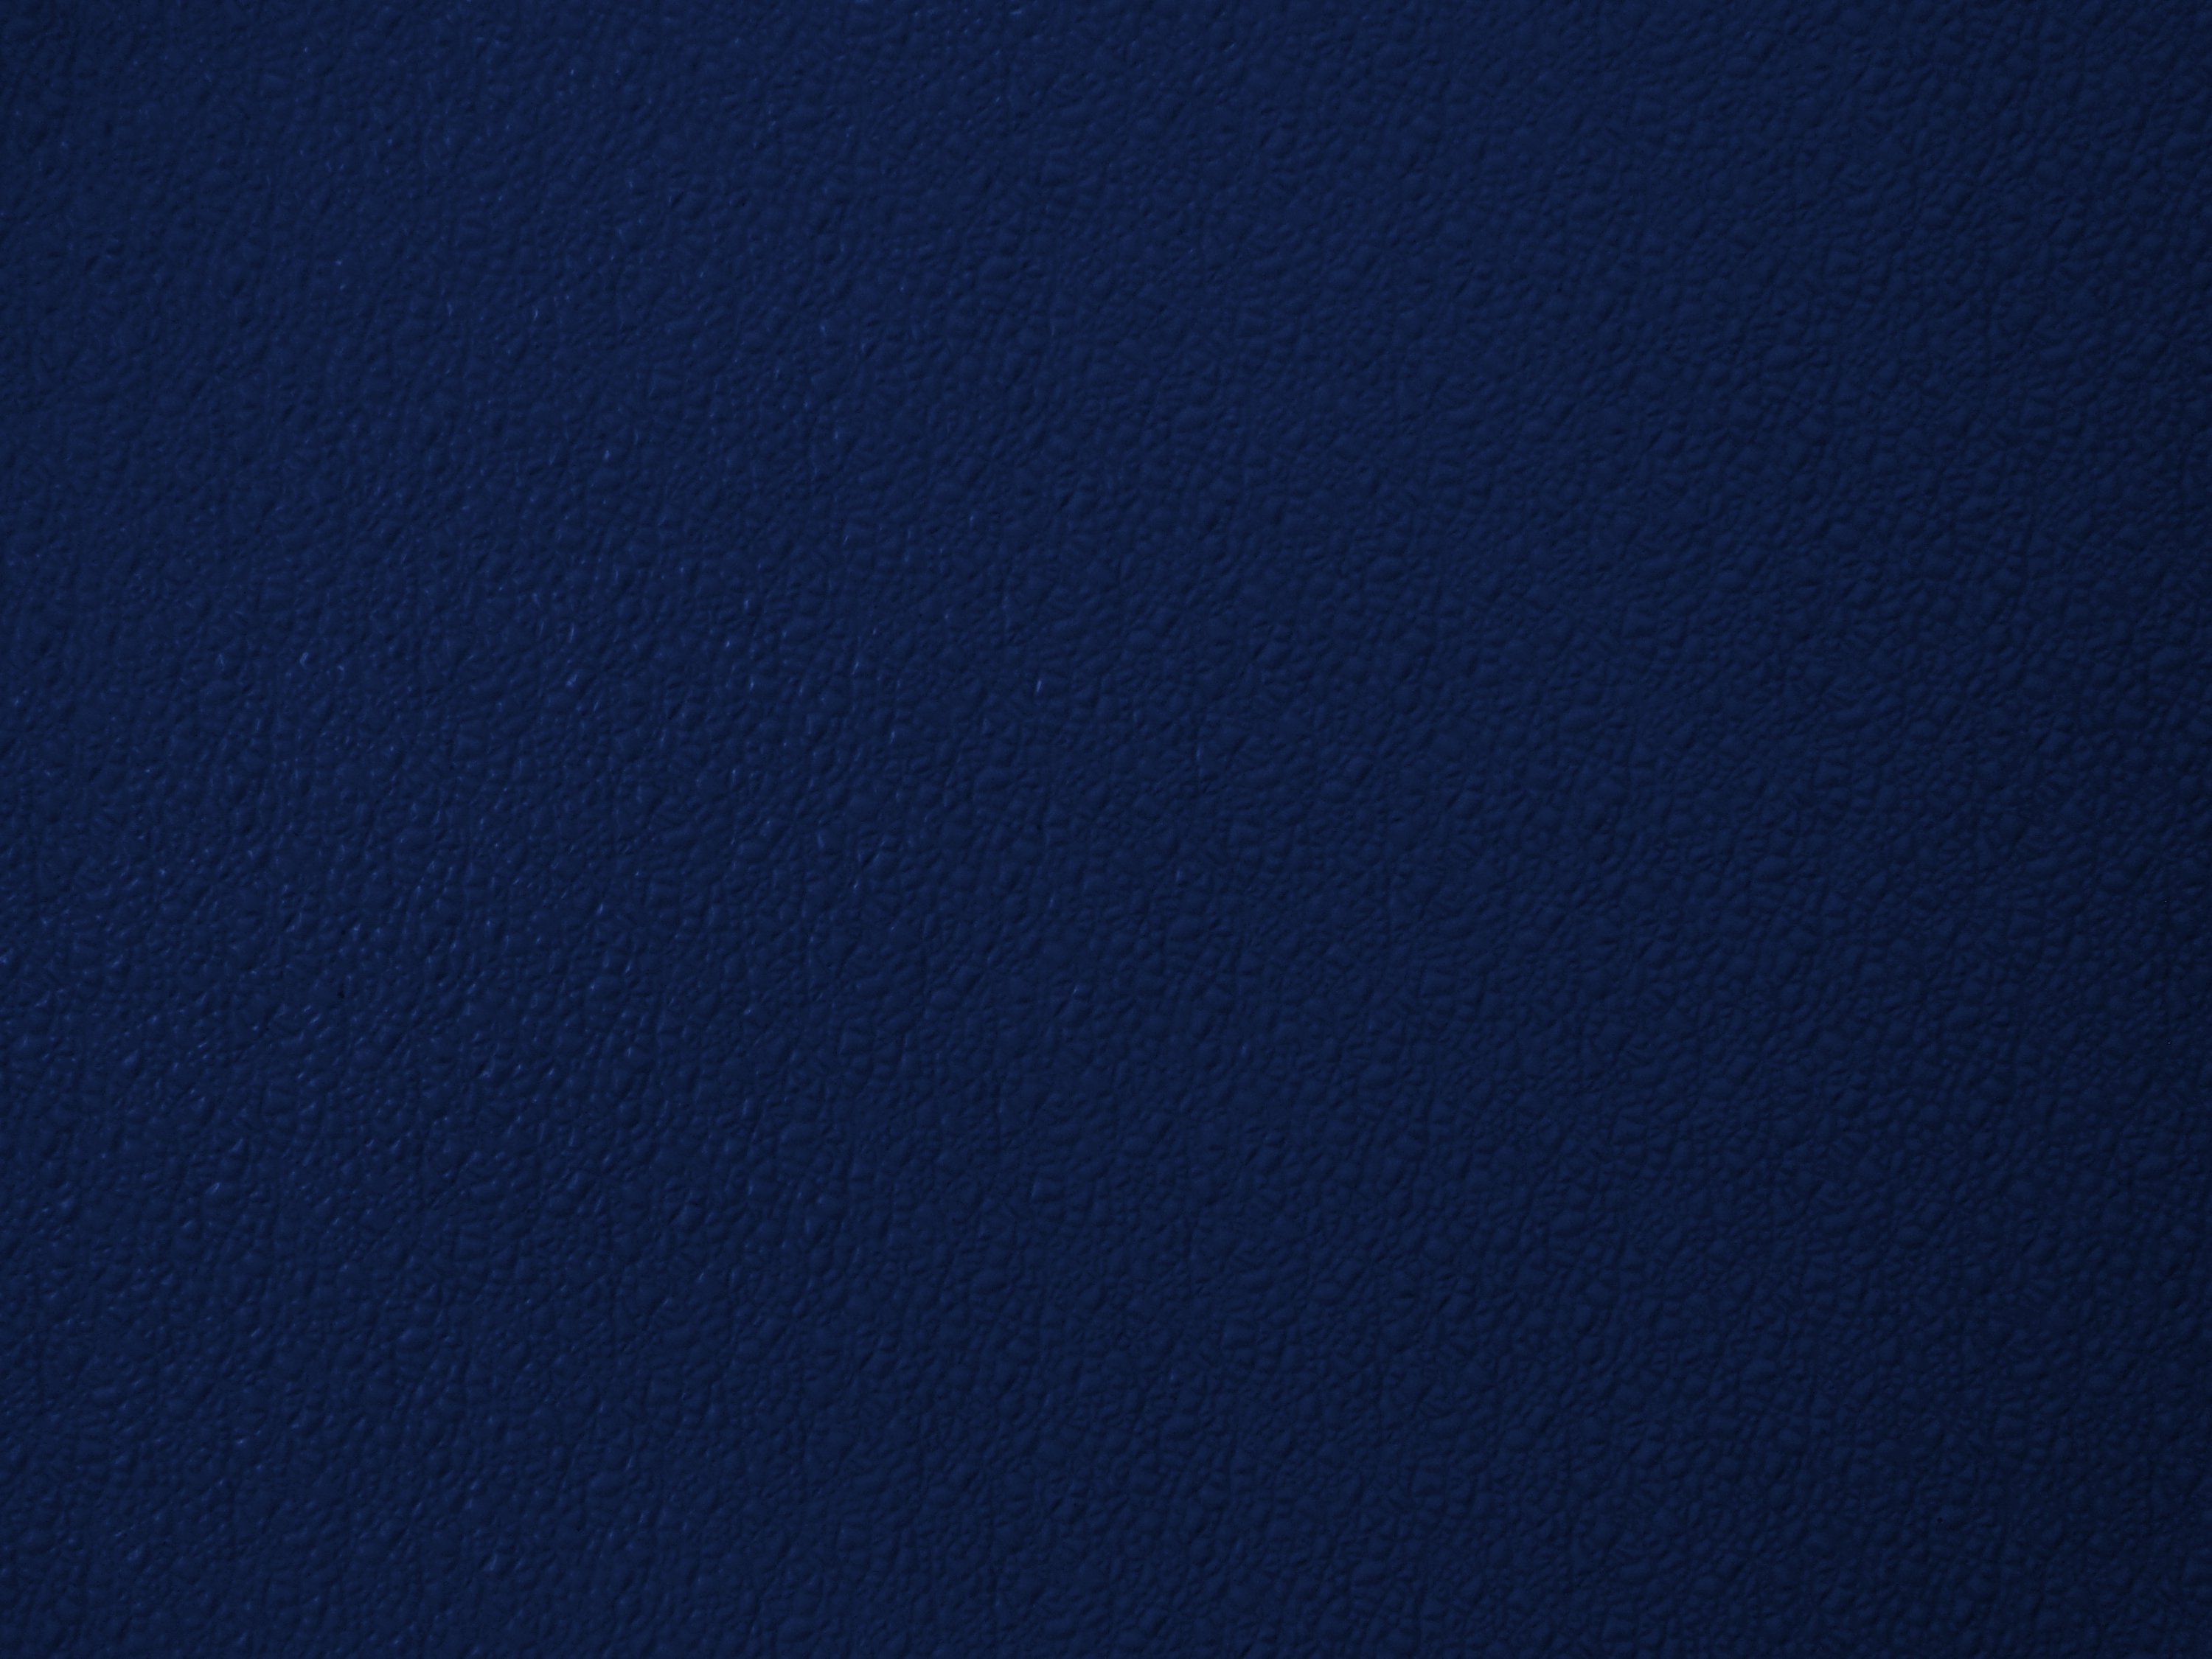 Navy Blue Textured Background Bumpy Plastic